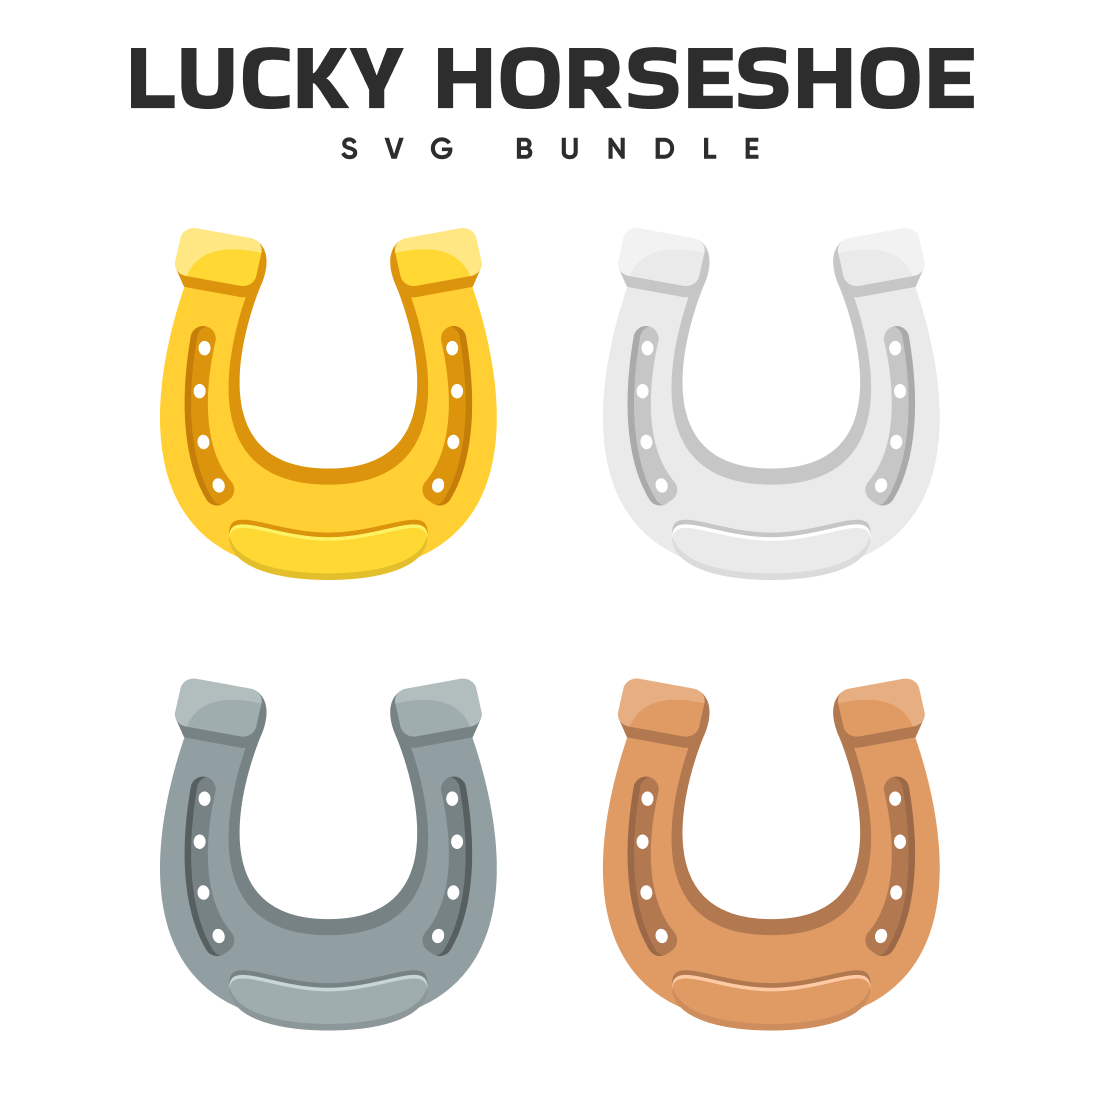 Set of four horseshoes with the words lucky horseshoe svg bundle.